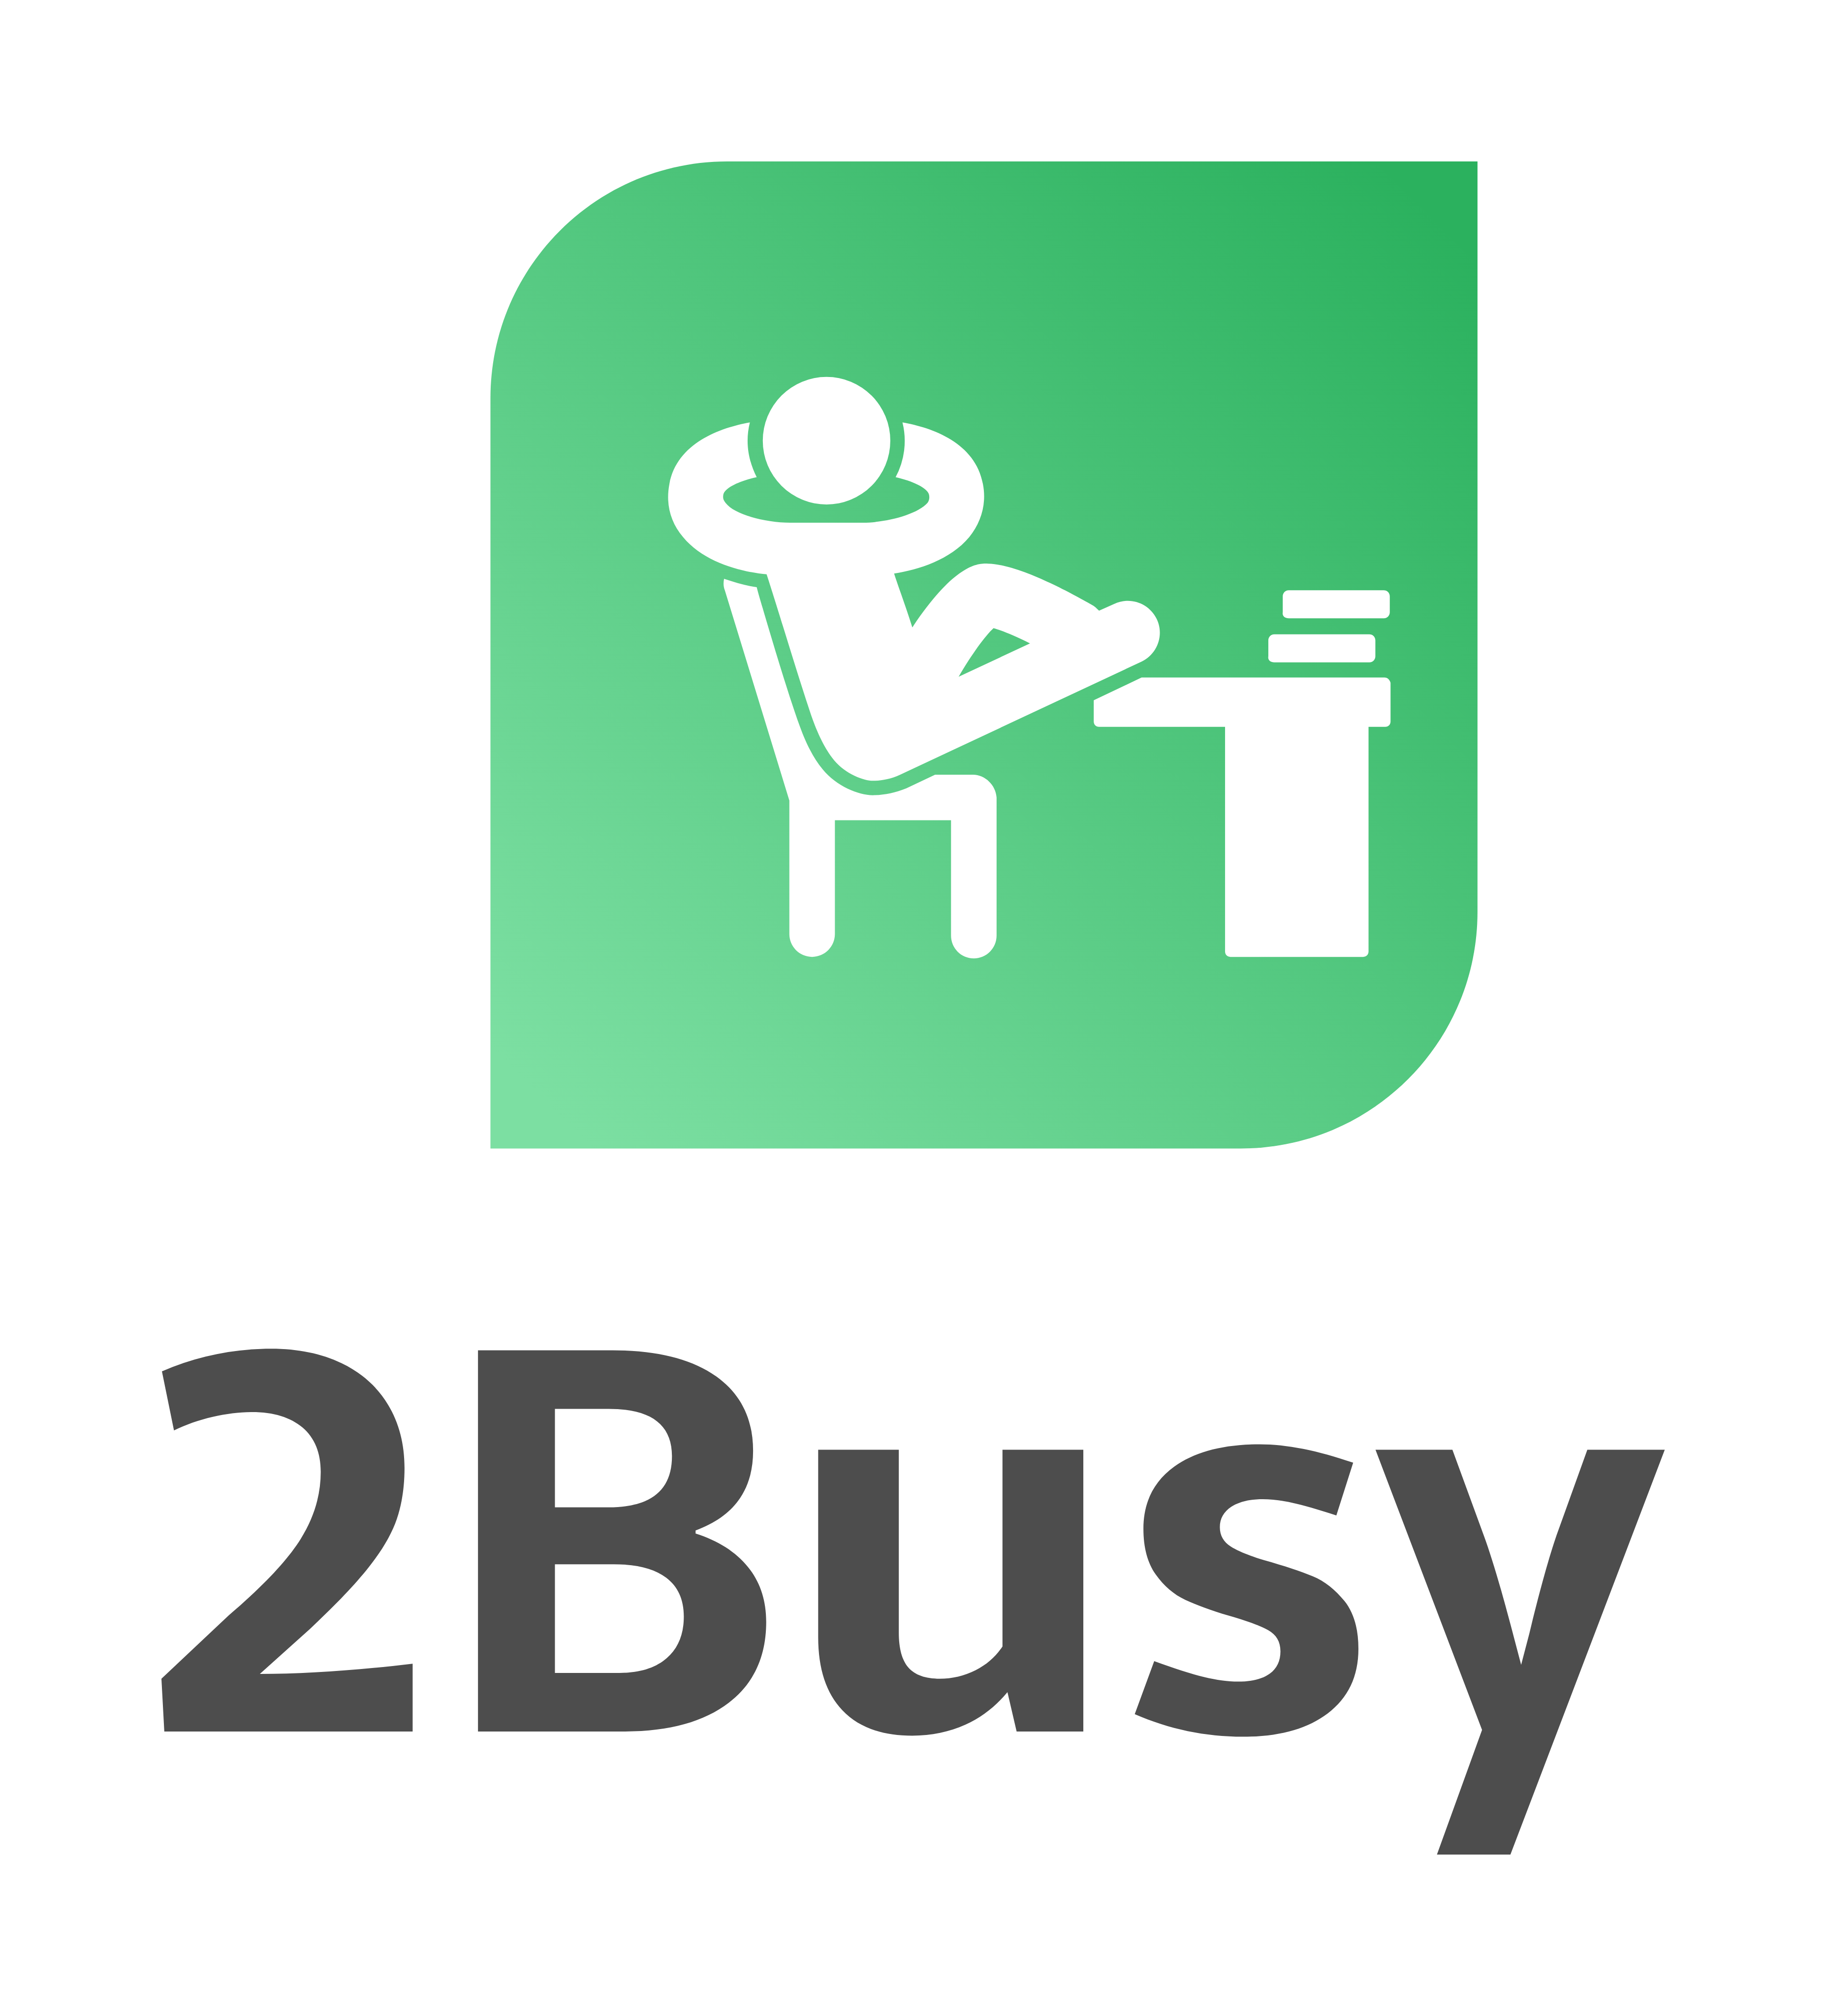 2Busy Logo